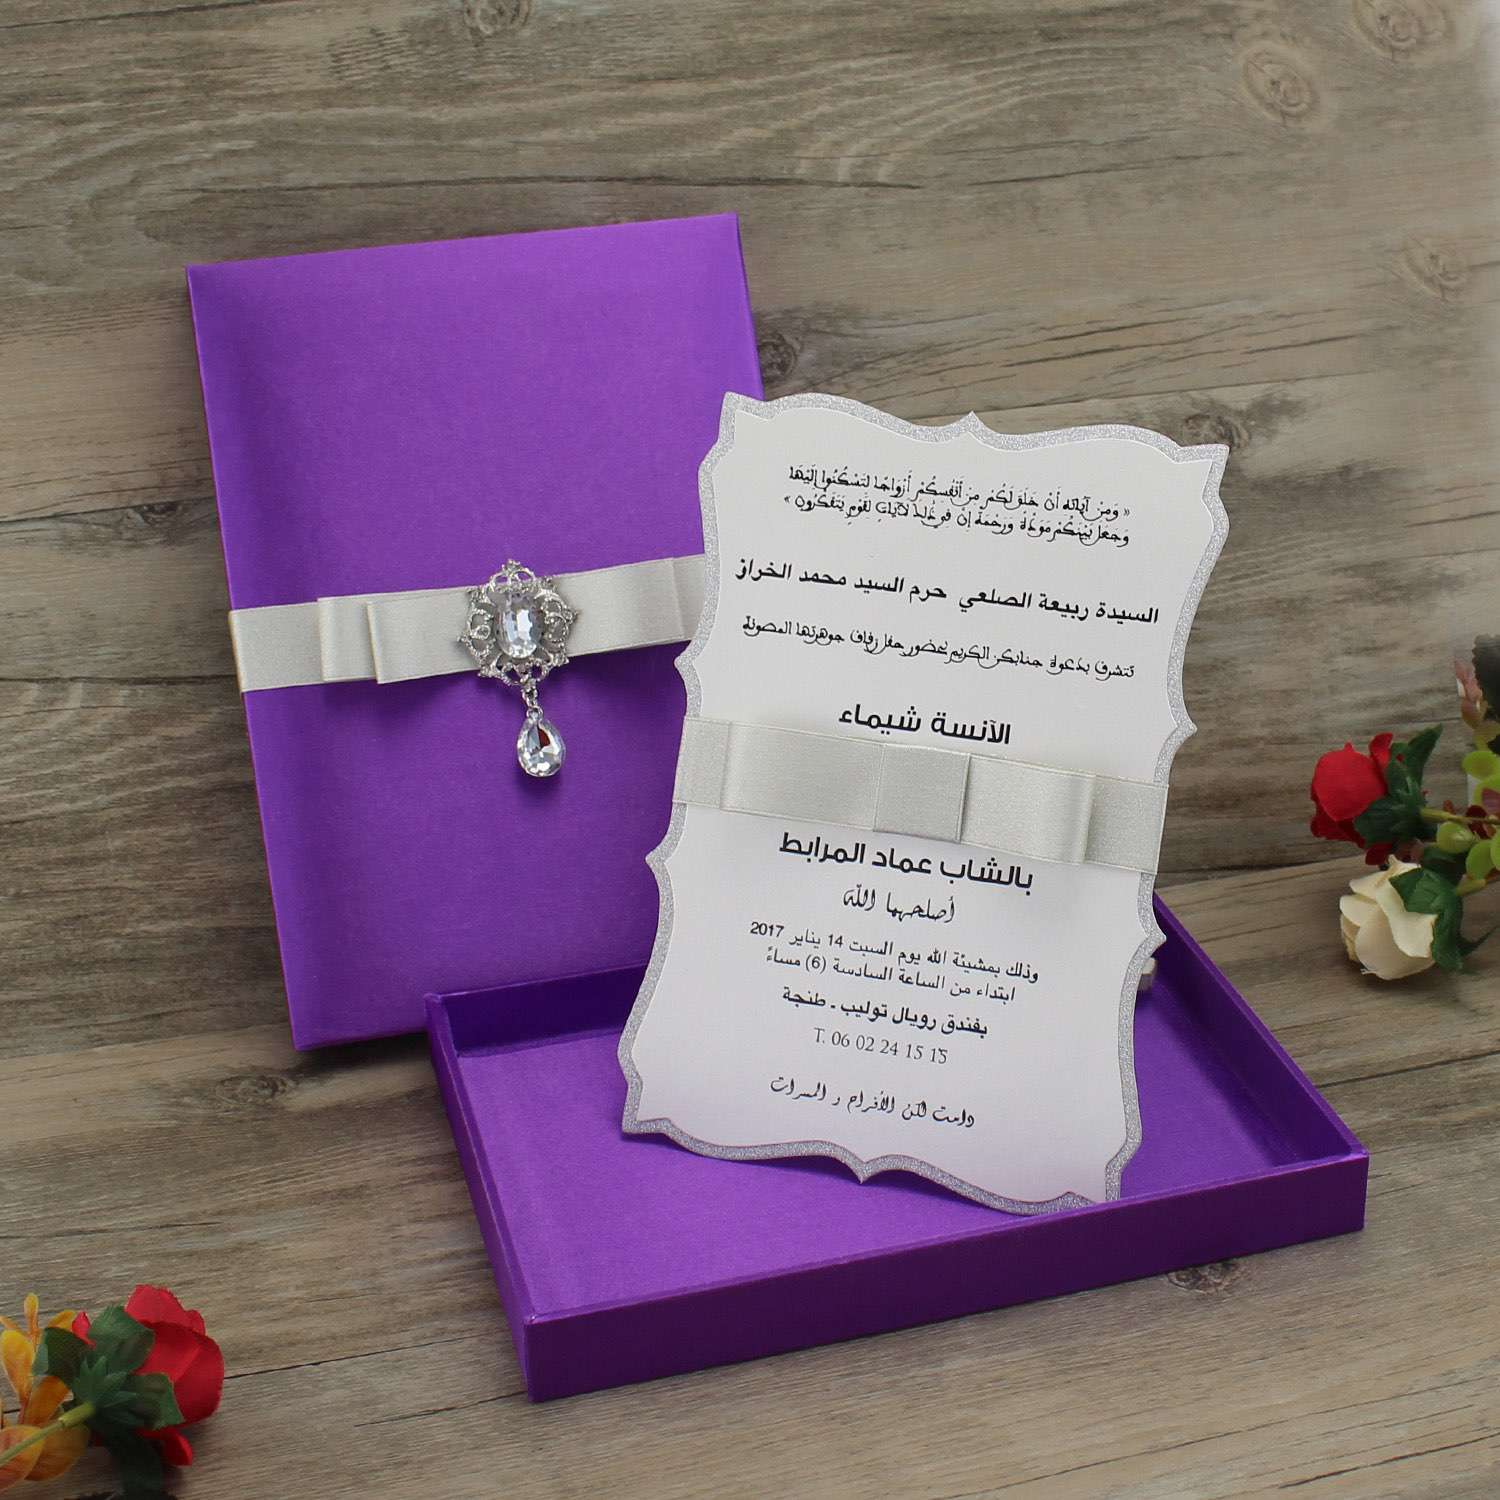 Purple Silk Box Wedding Invitation Card with Ribbon Bow Customized